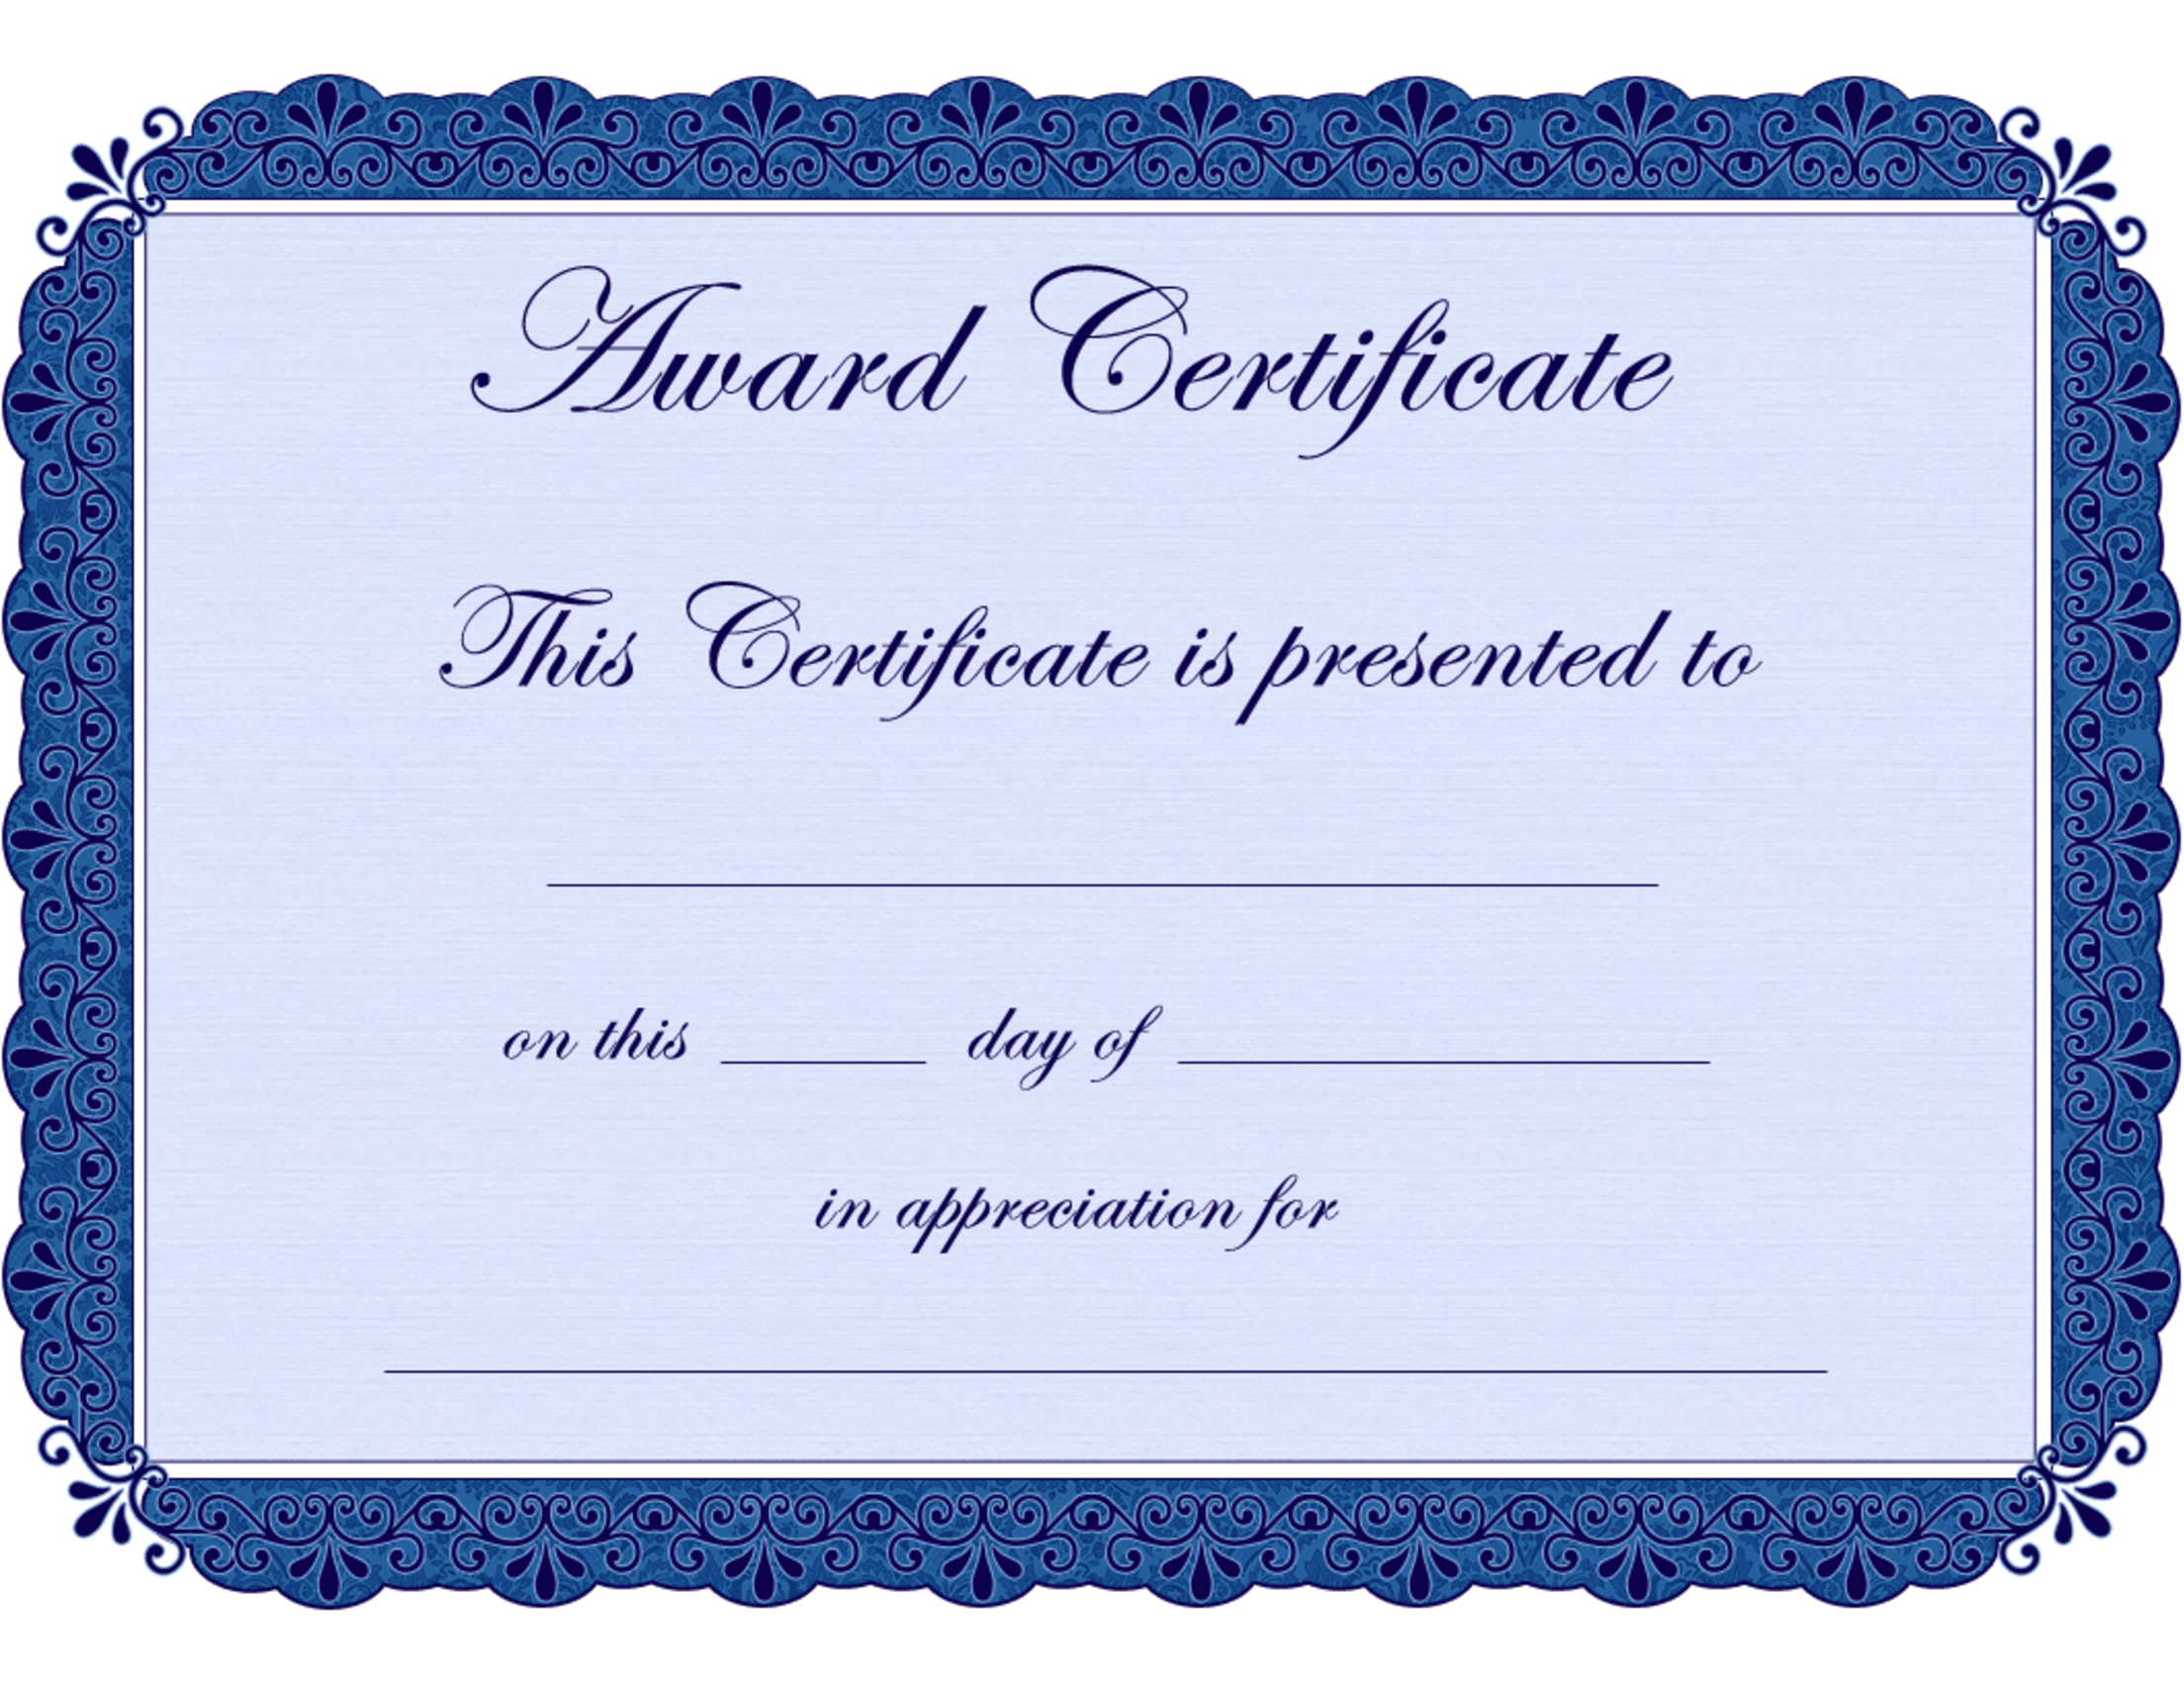 Free Printable Award Certificate Borders |  Award Intended For Free Printable Certificate Border Templates